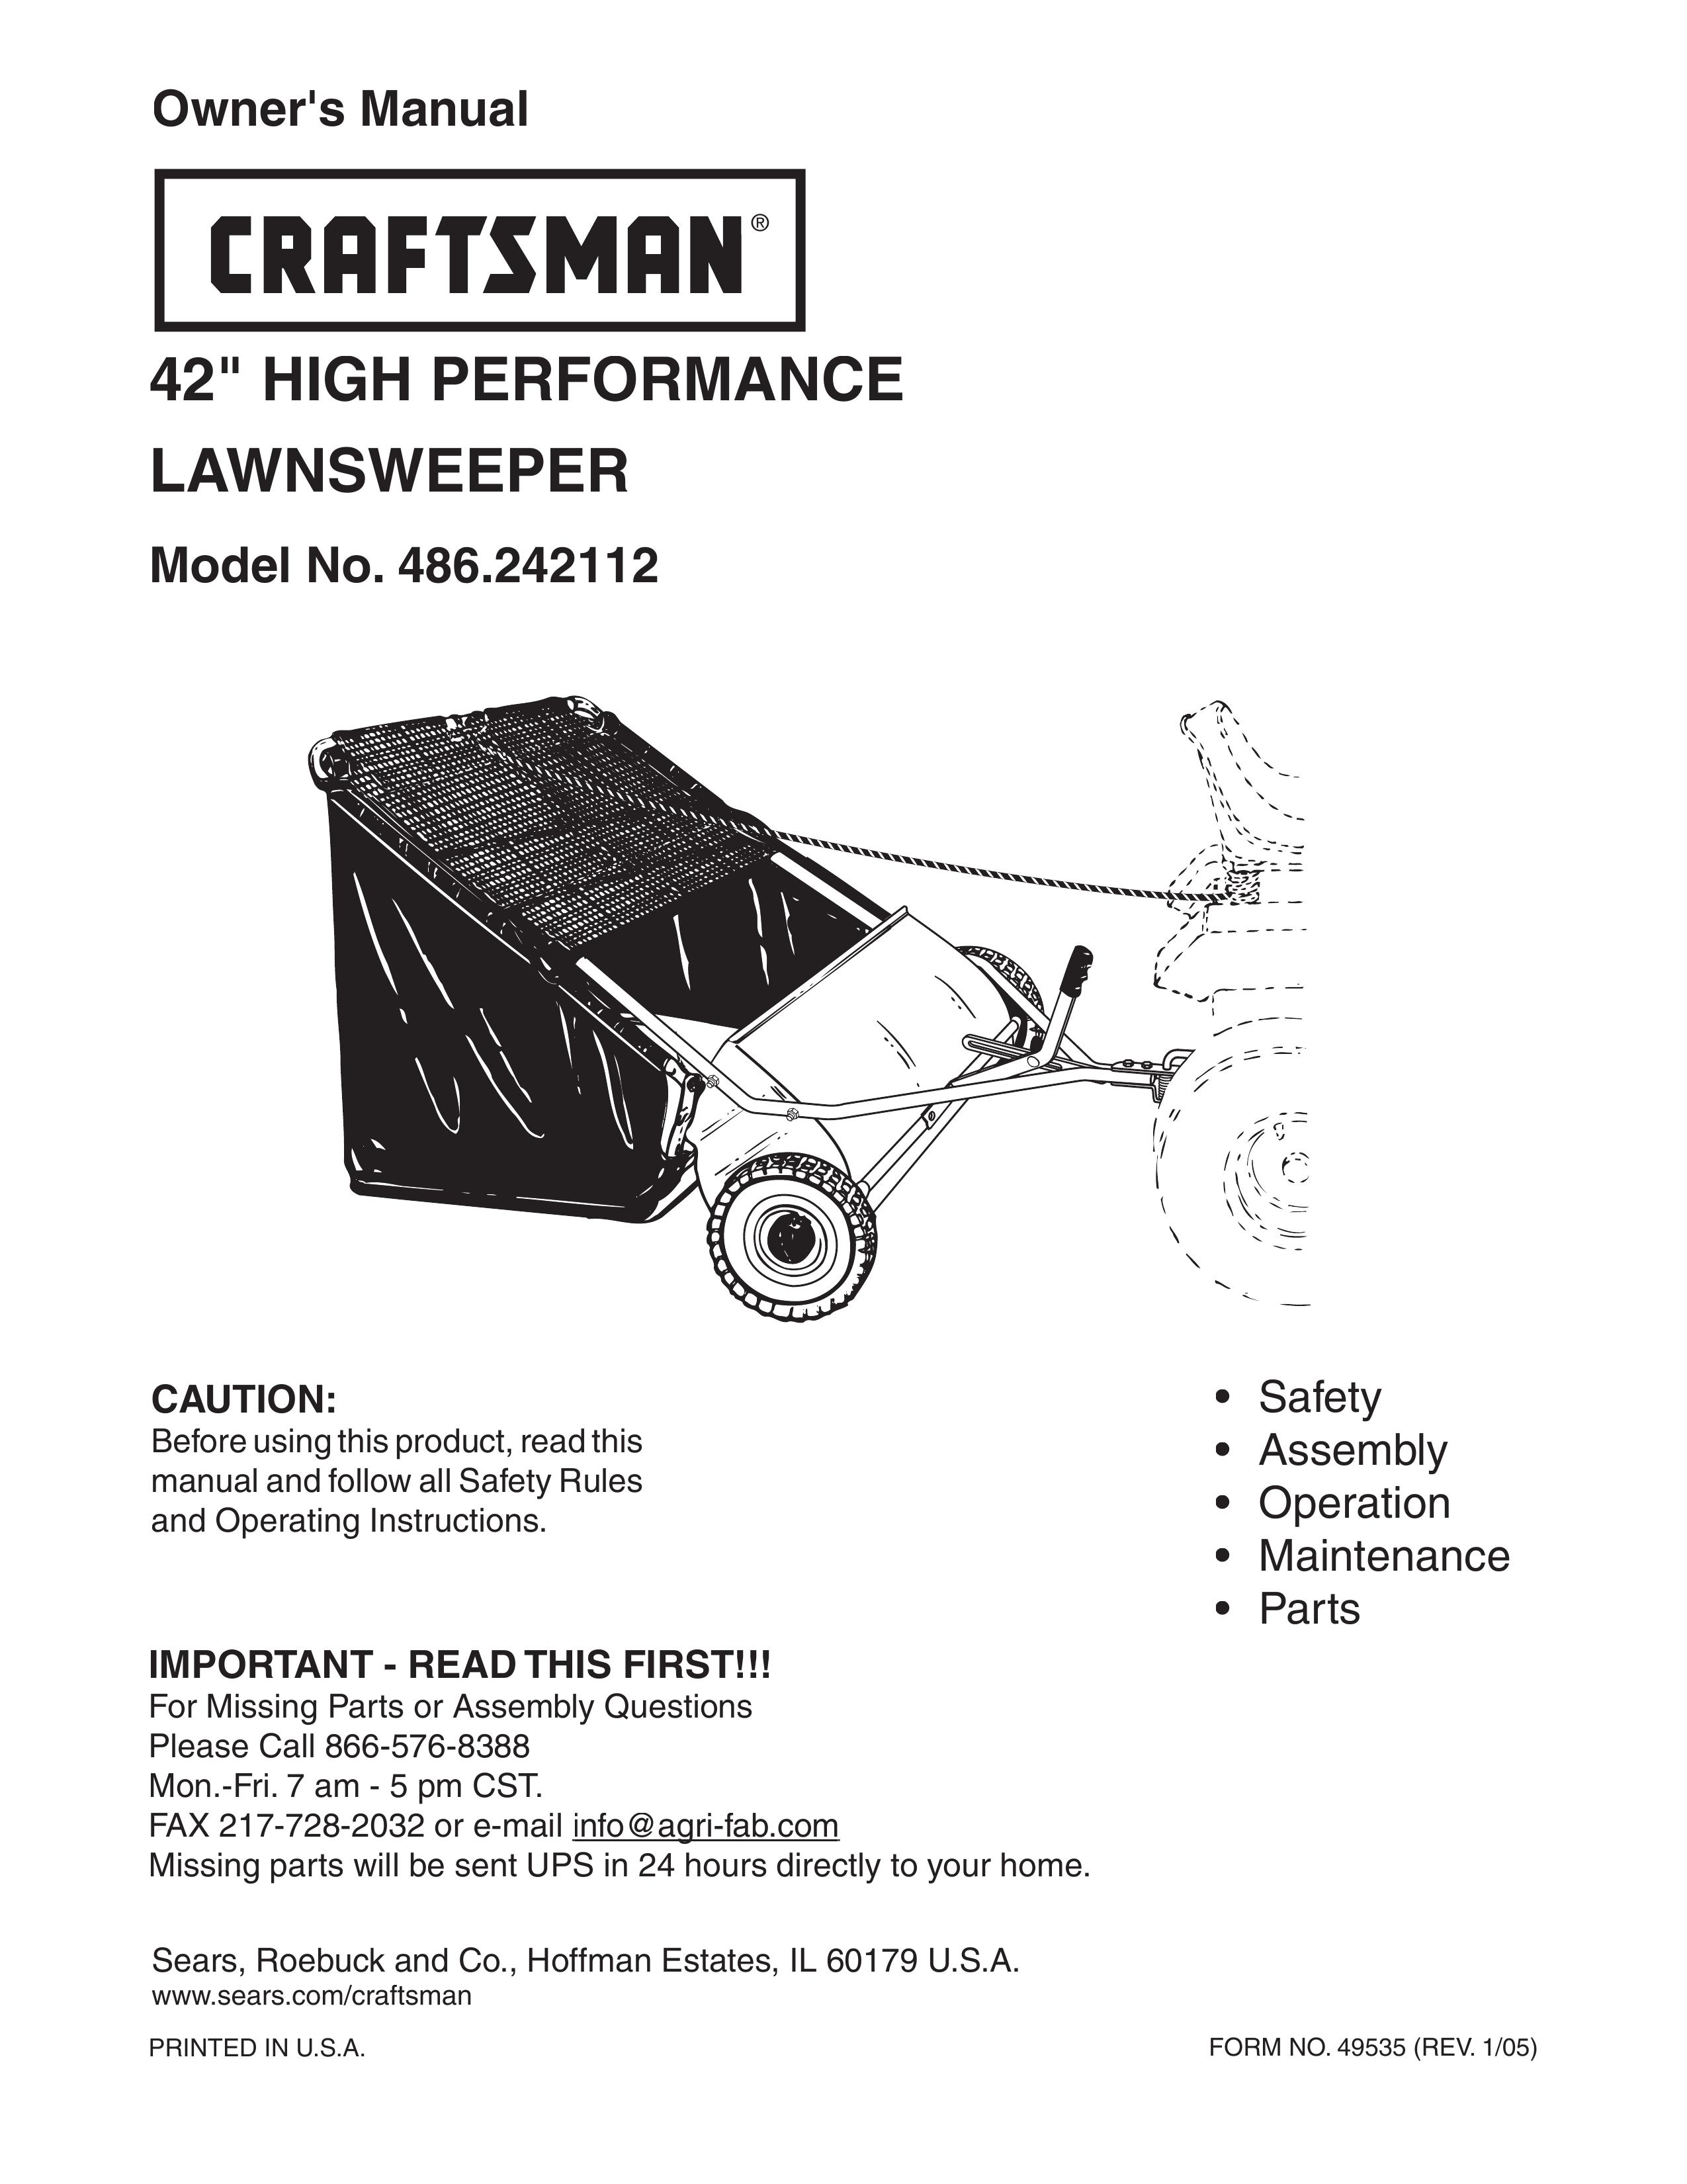 Craftsman 486.242112 Lawn Sweeper User Manual